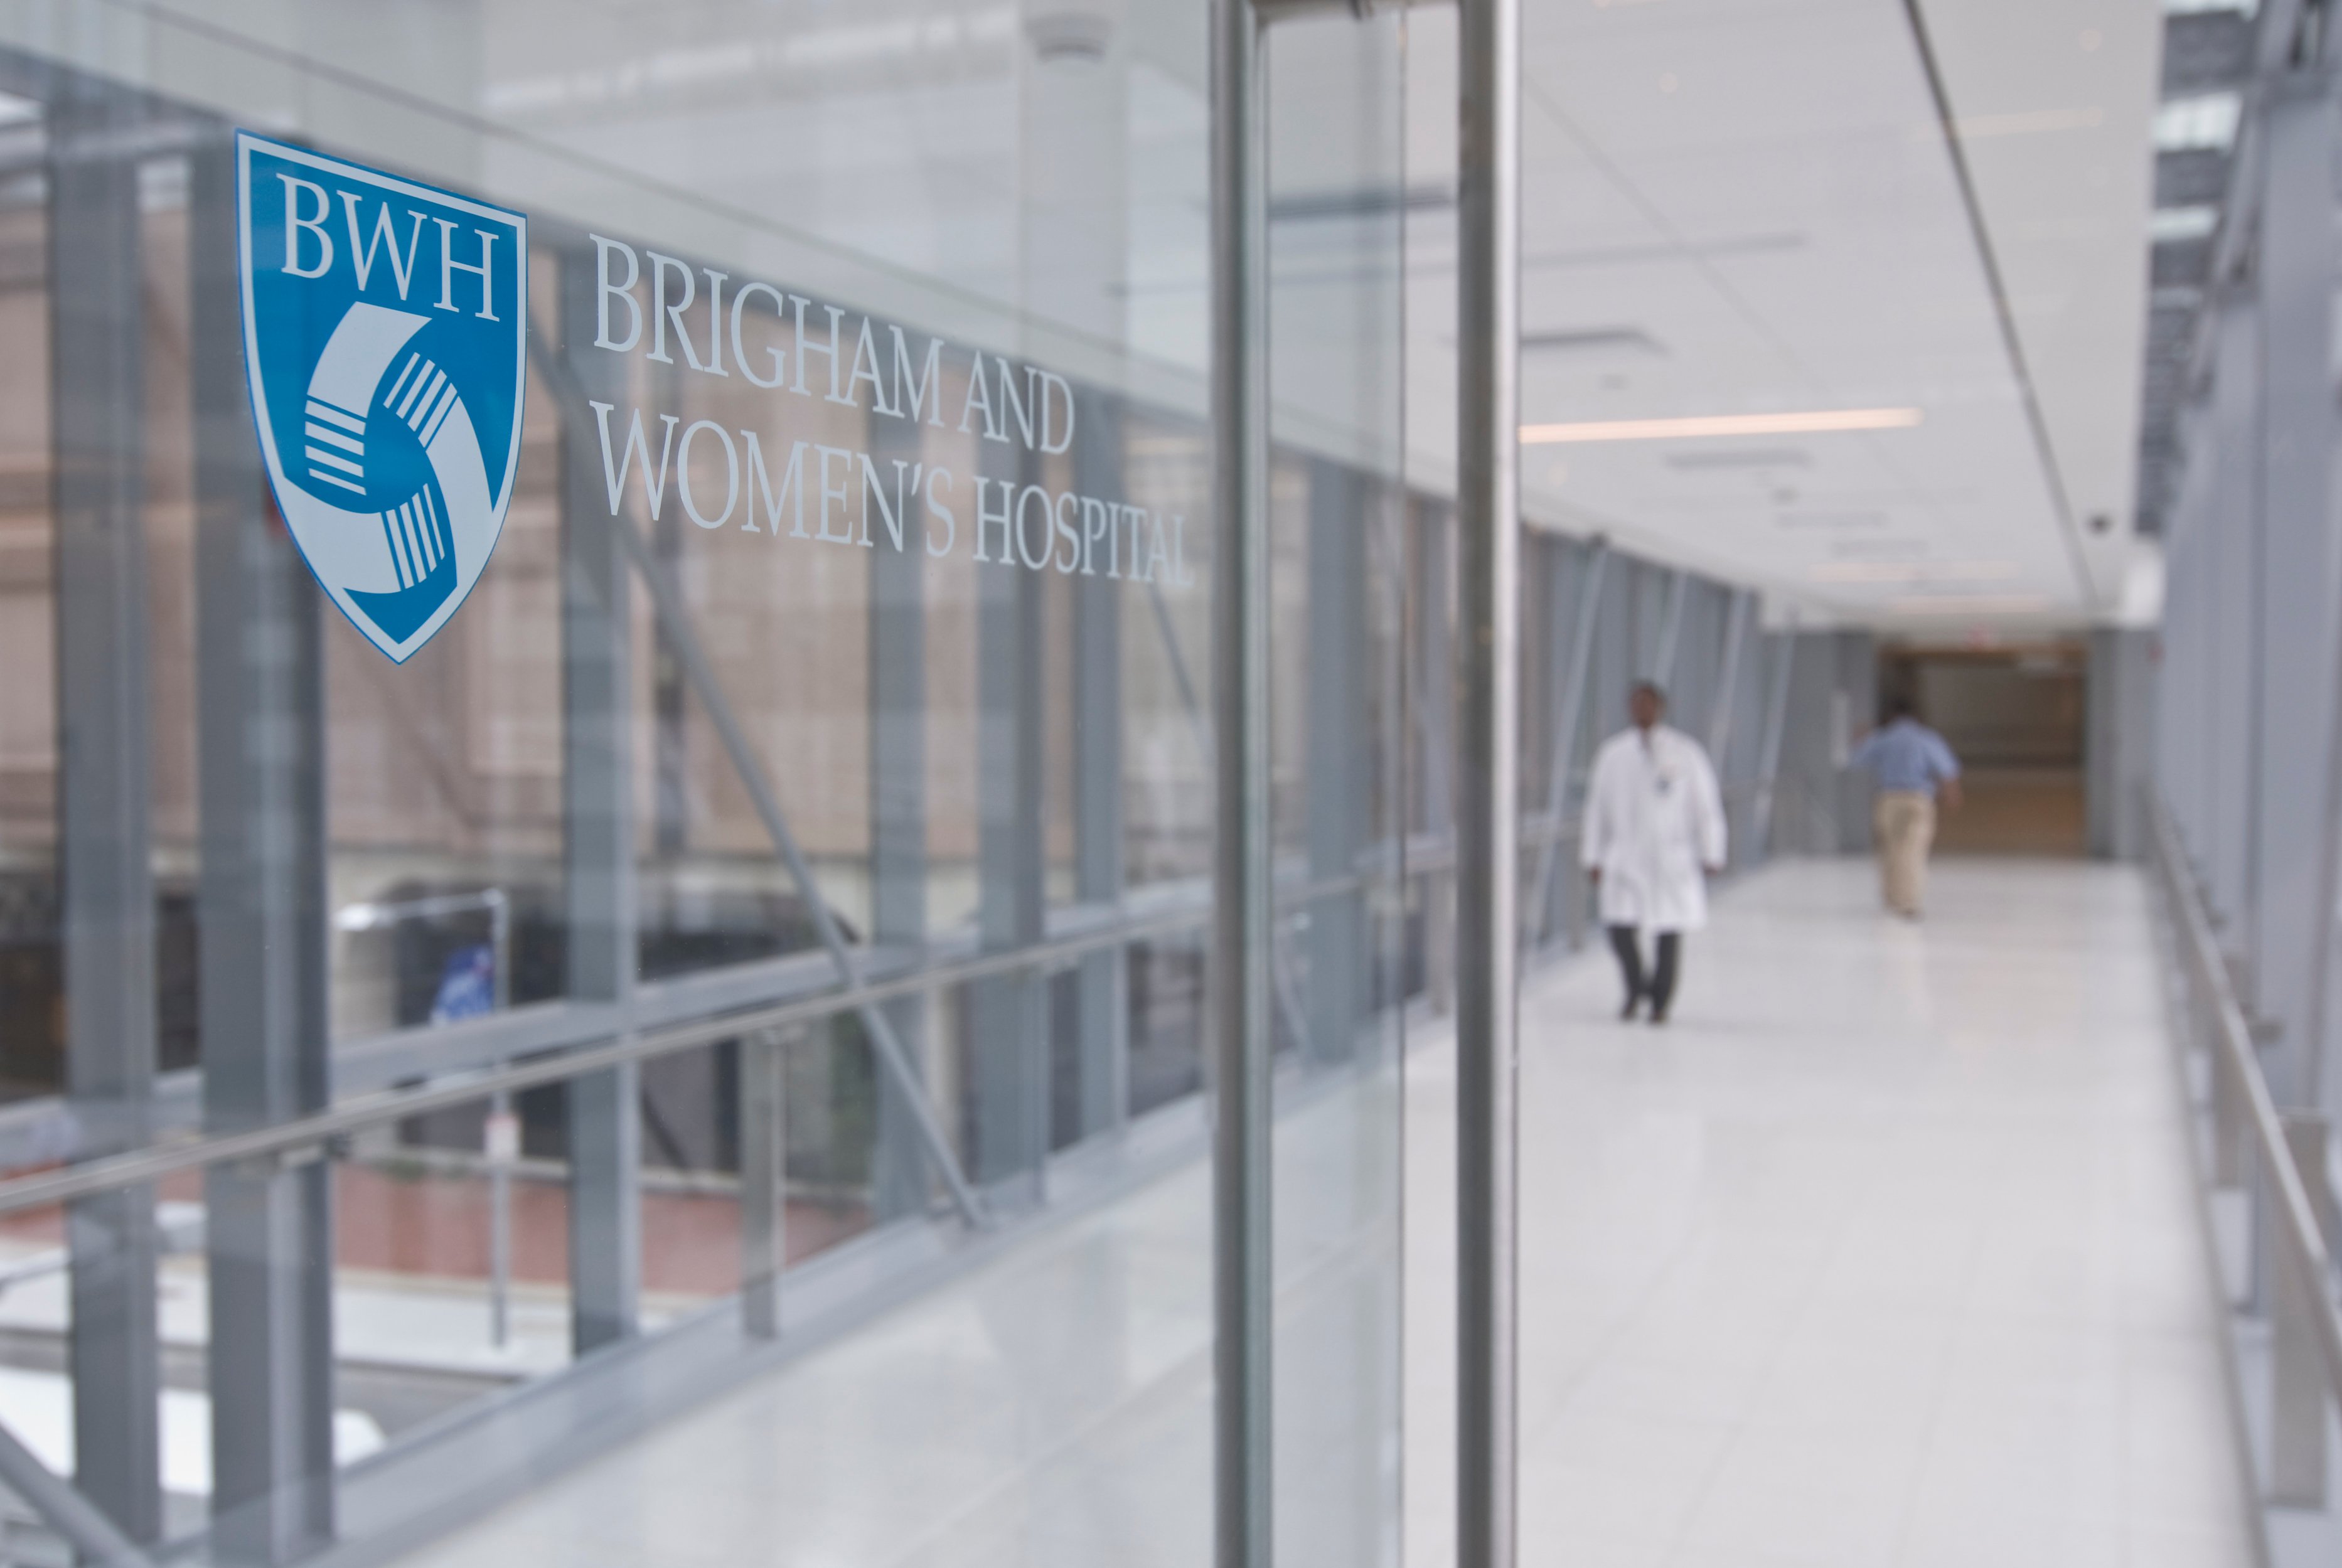 Brigham and Womens Hospital